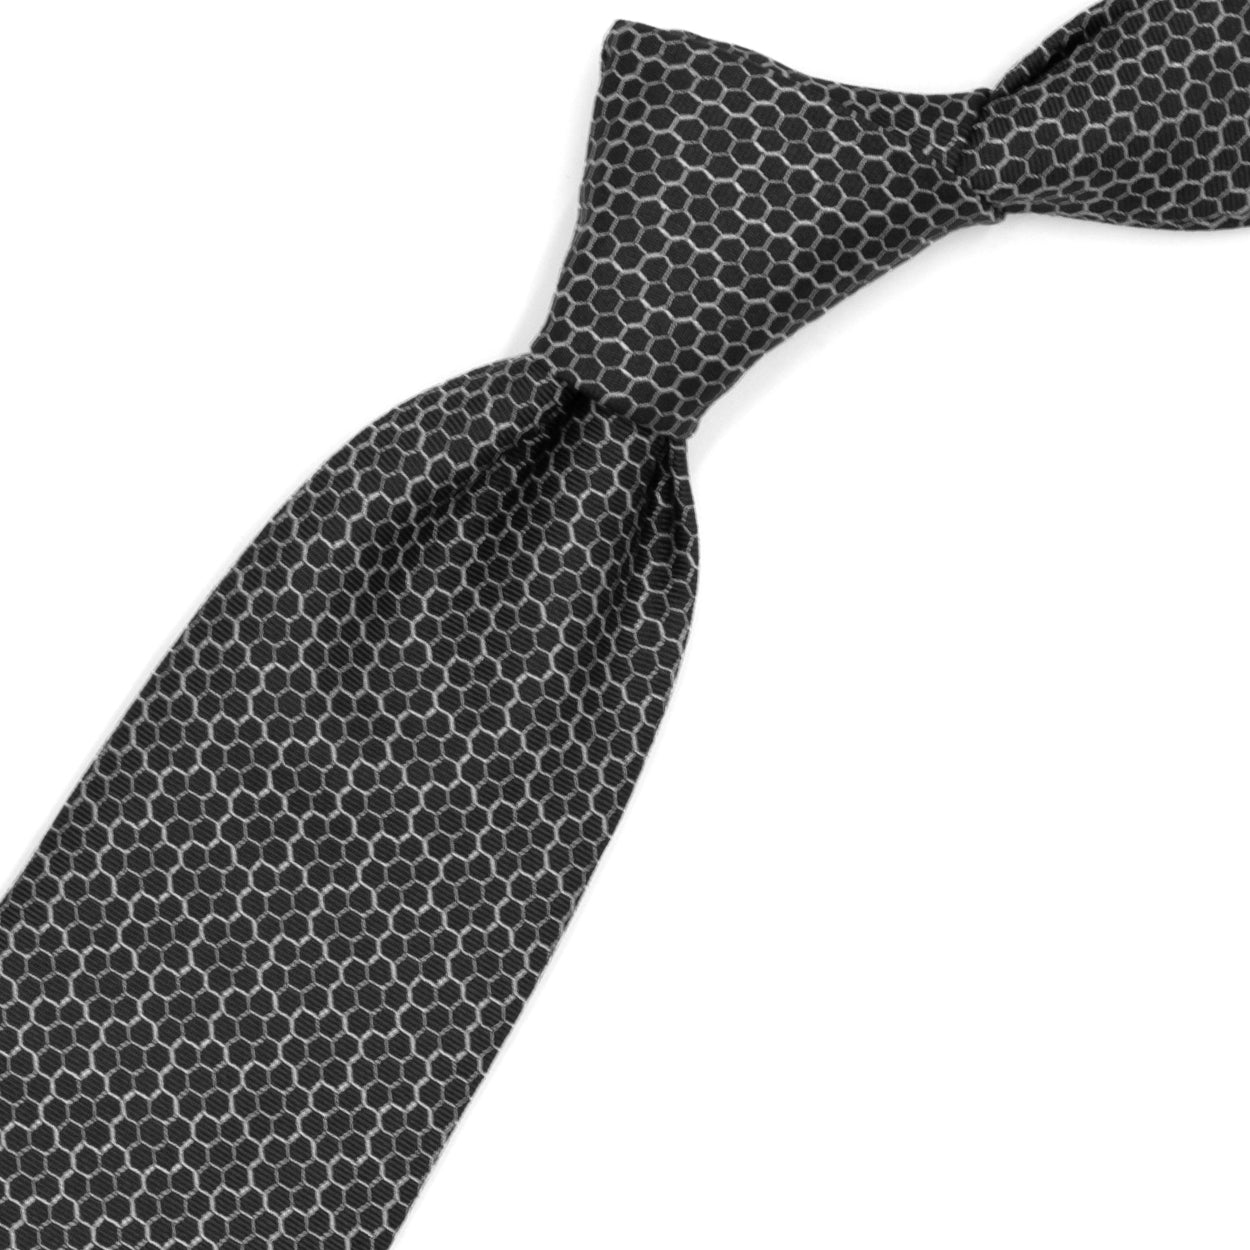 Gray tie with light gray circles